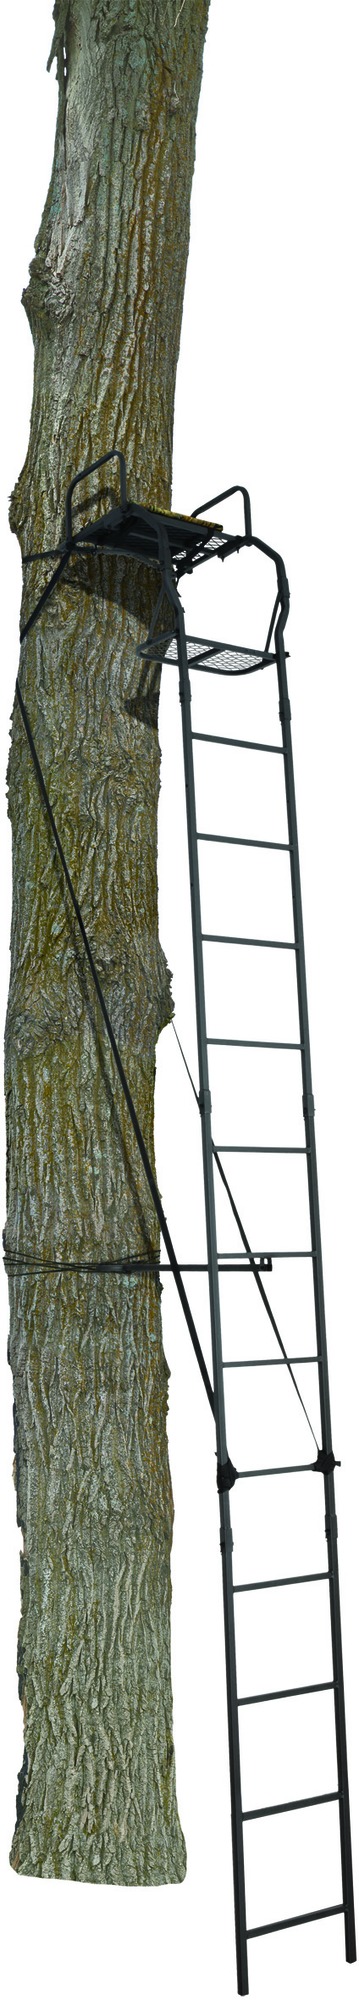 Big Game LS0100 The Warrior Pro Treestand, 16' Basic Ladderstand